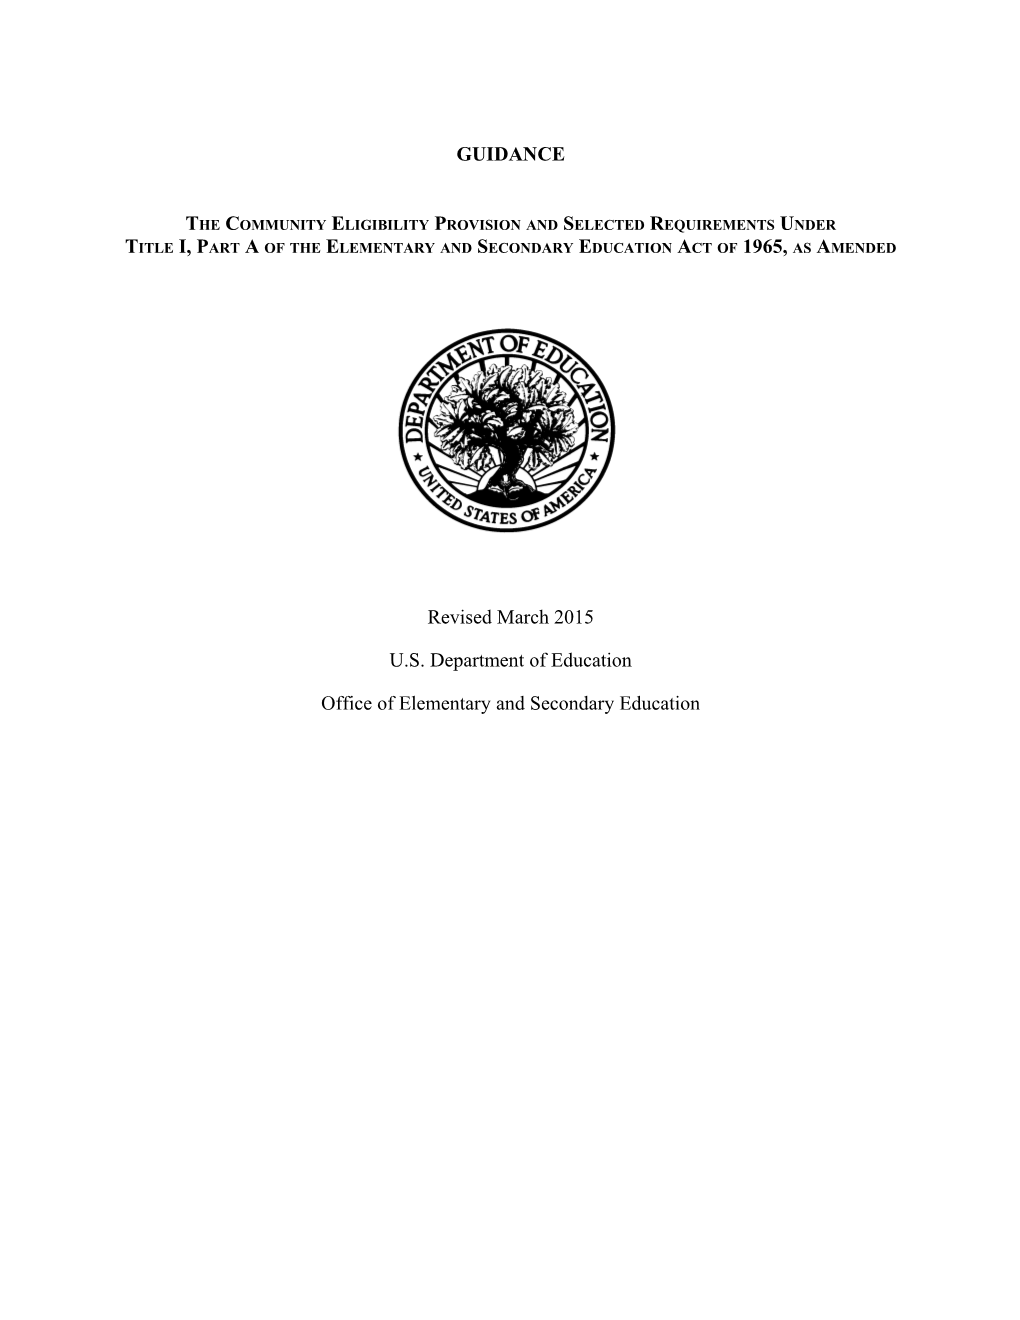 Community Eligibility Provision Guidance (PDF)